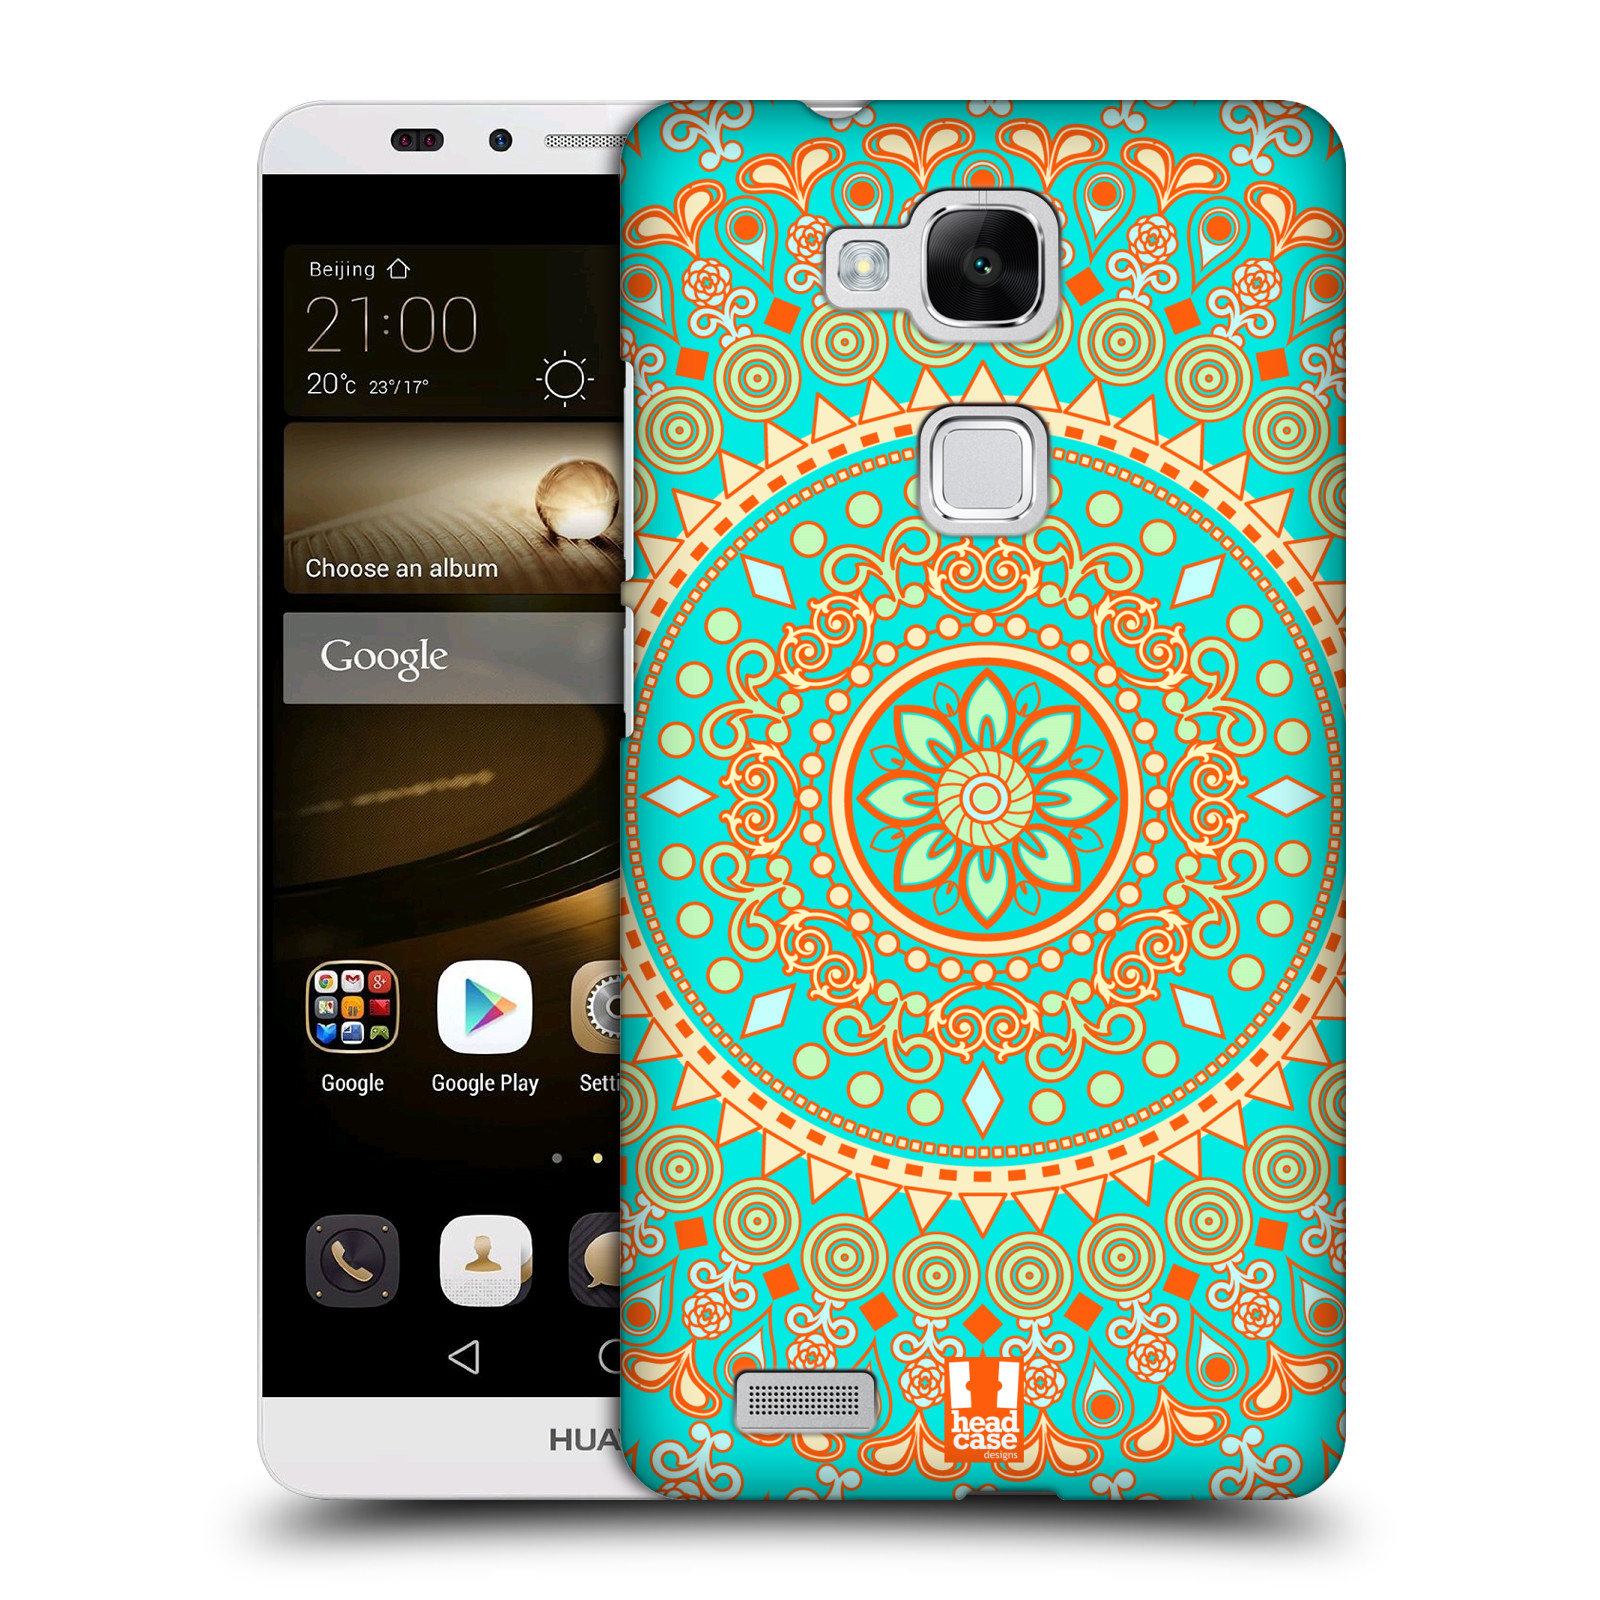 HEAD CASE plastový obal na mobil Huawei Mate 7 vzor Indie Mandala slunce barevný motiv TYRKYSOVÁ, ZELENÁ